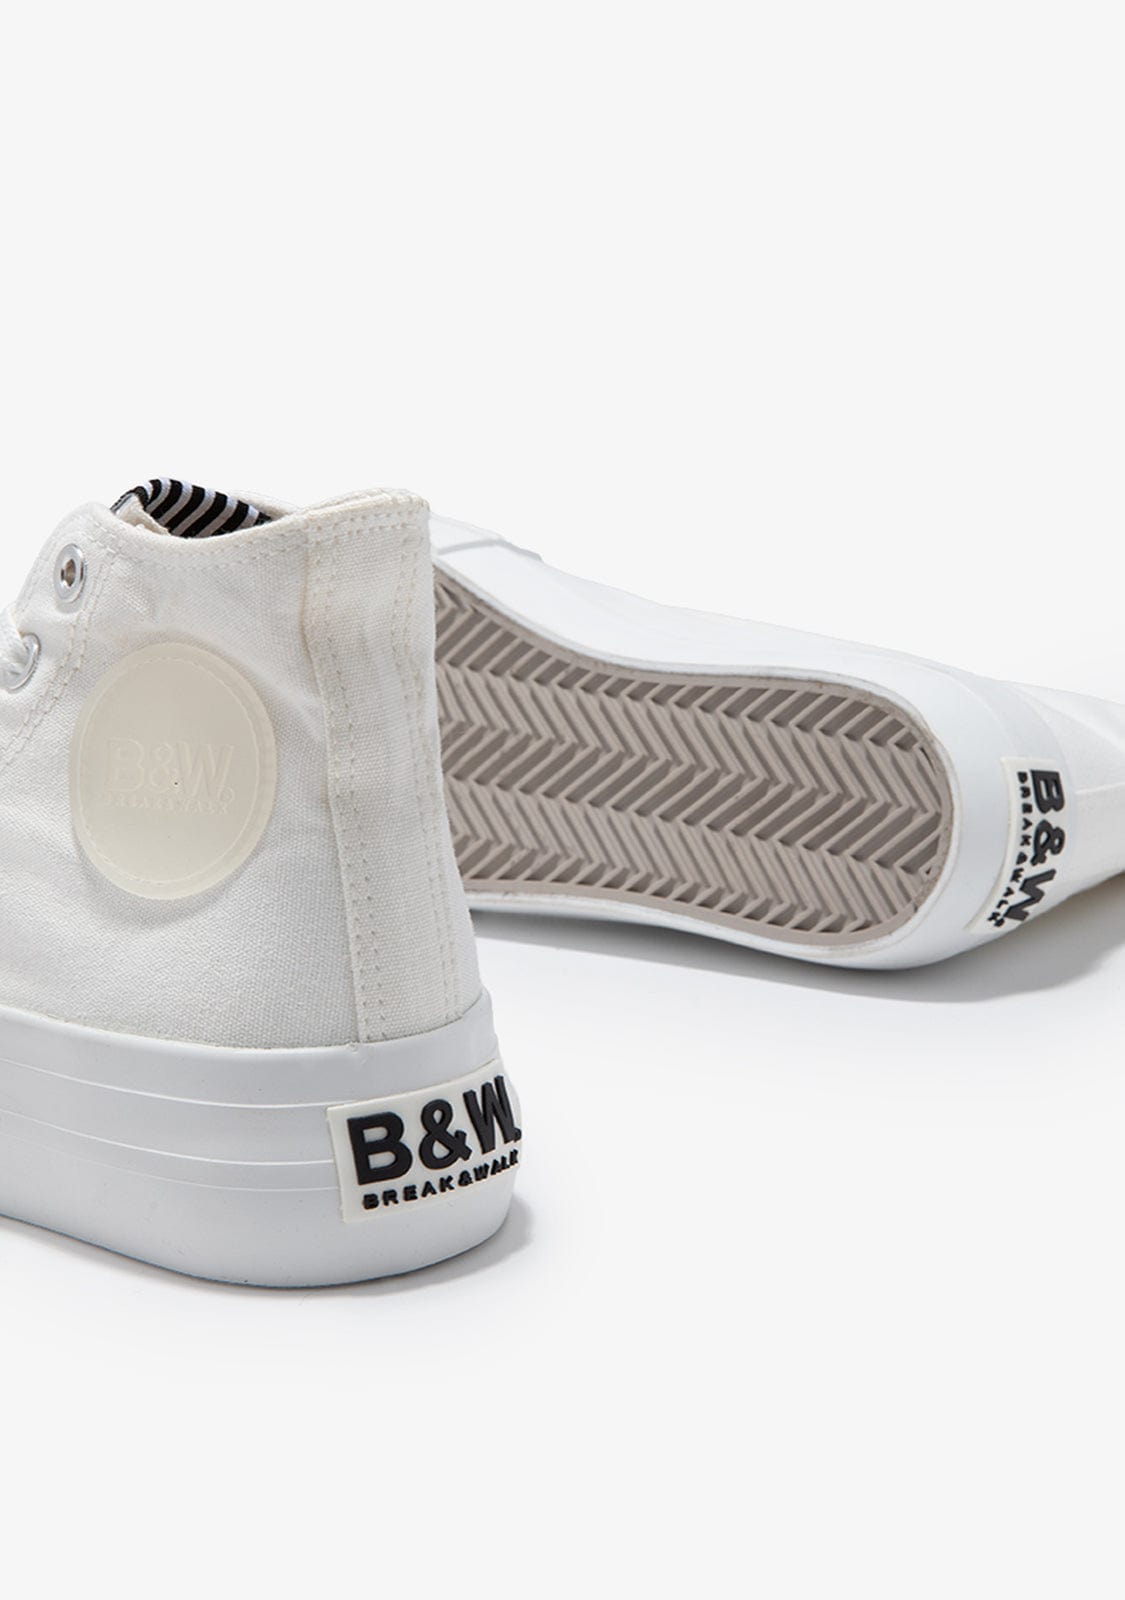 B&W JUNIOR BASKET Canvas Platform High Top Sneakers White B&W